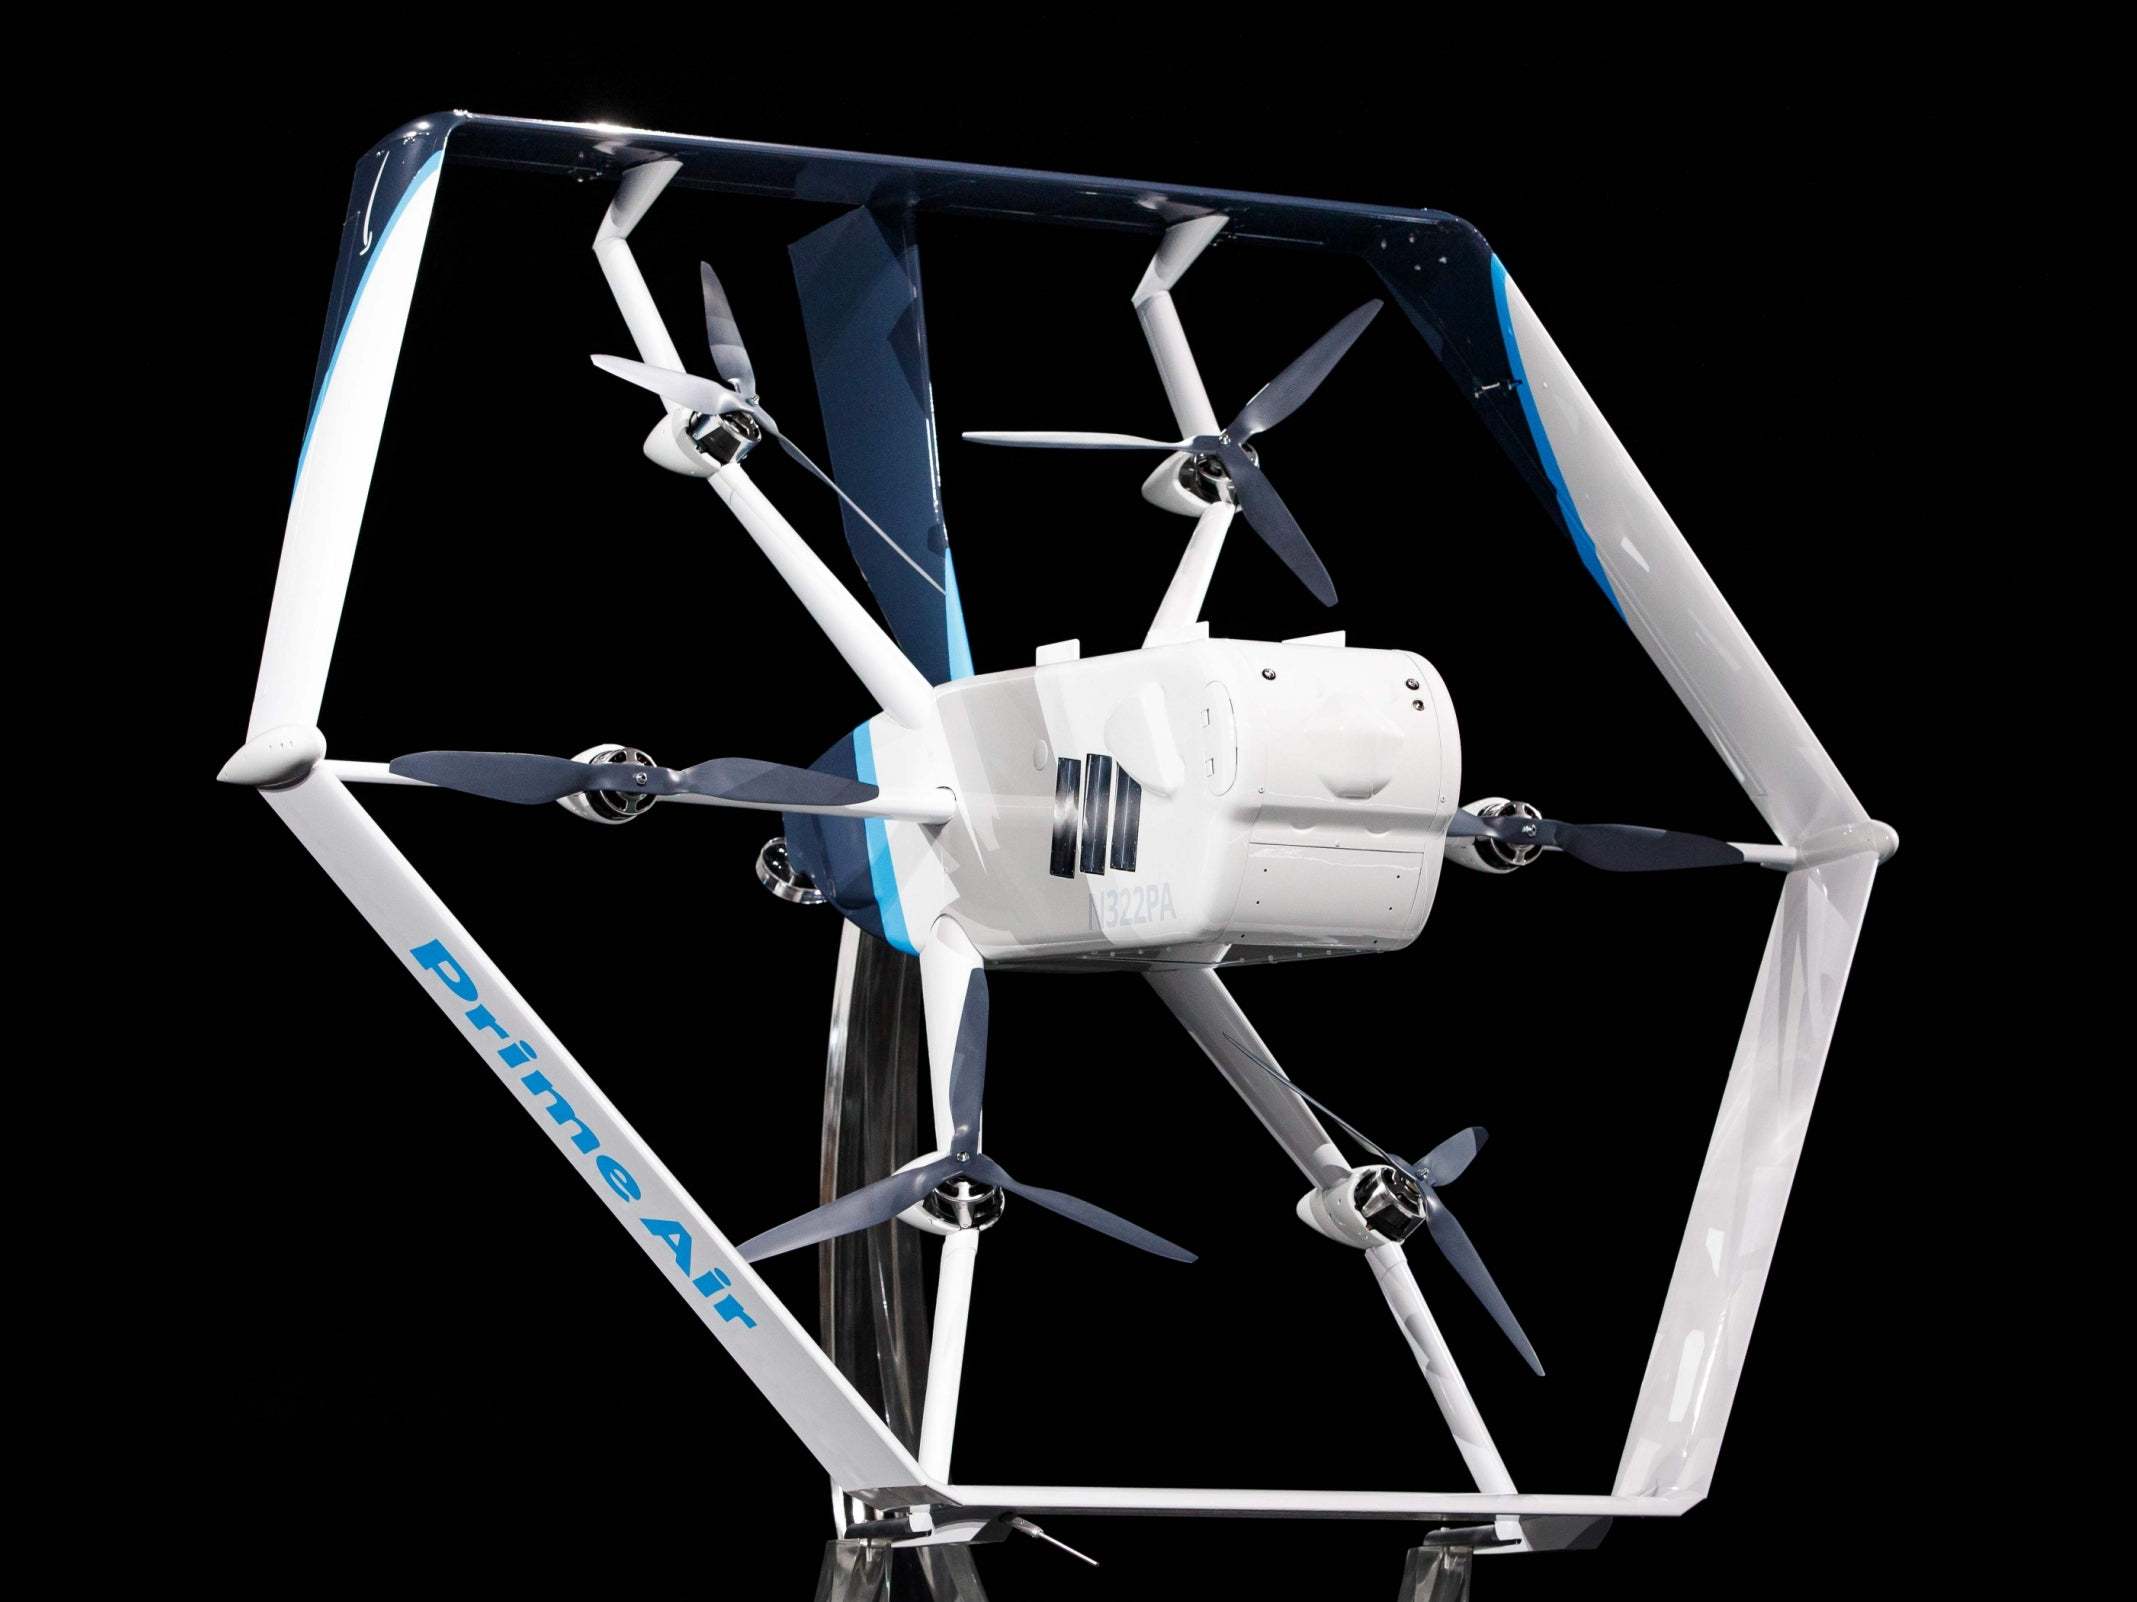 drones for sale amazon uk